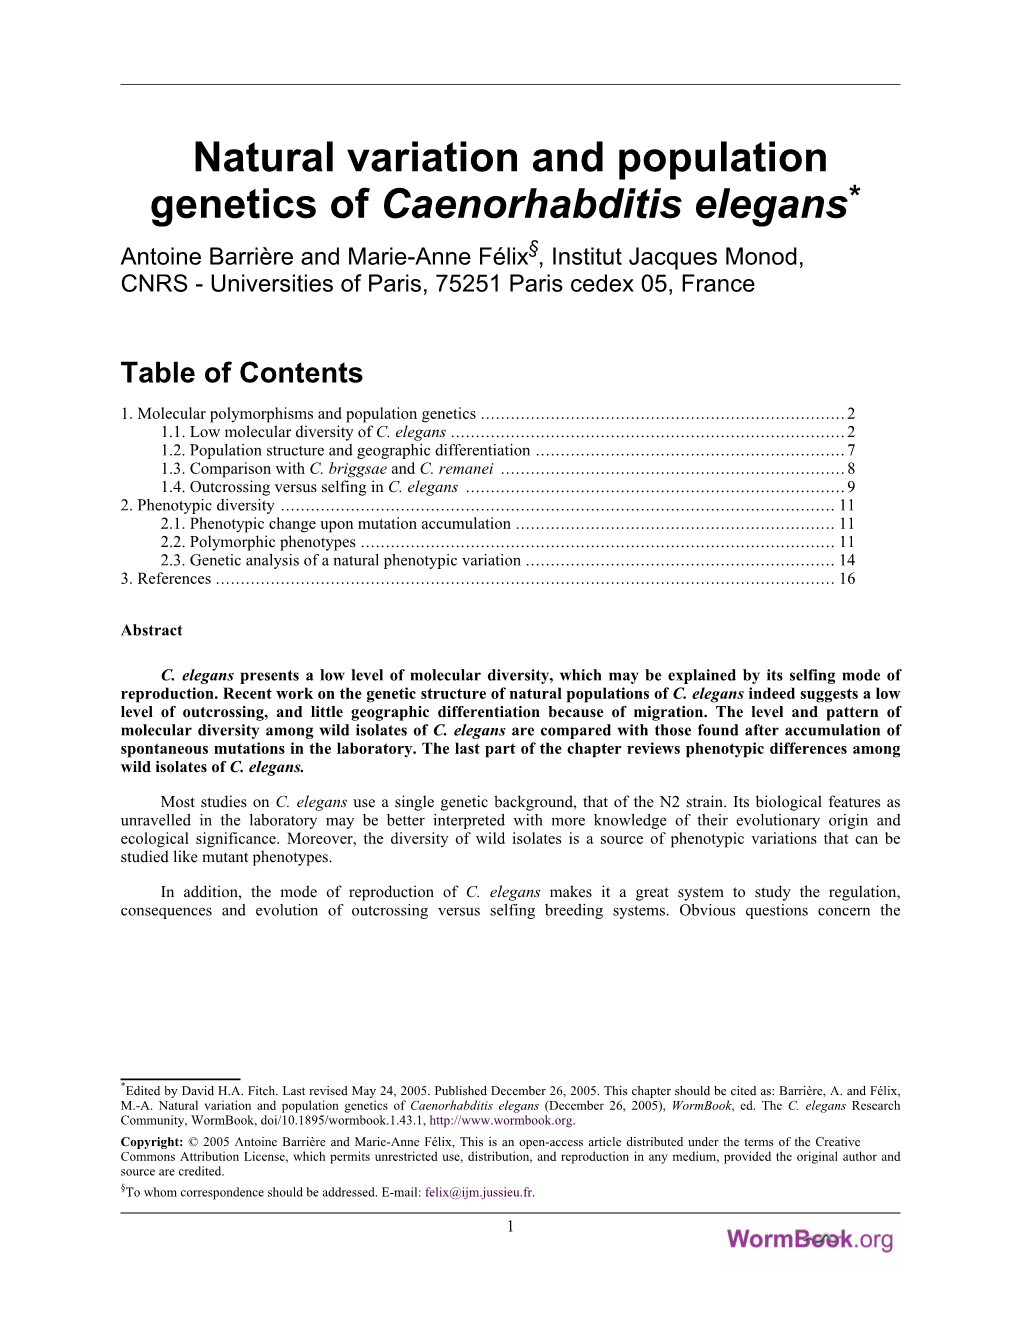 Natural Variation and Population Genetics of Caenorhabditis Elegans* §